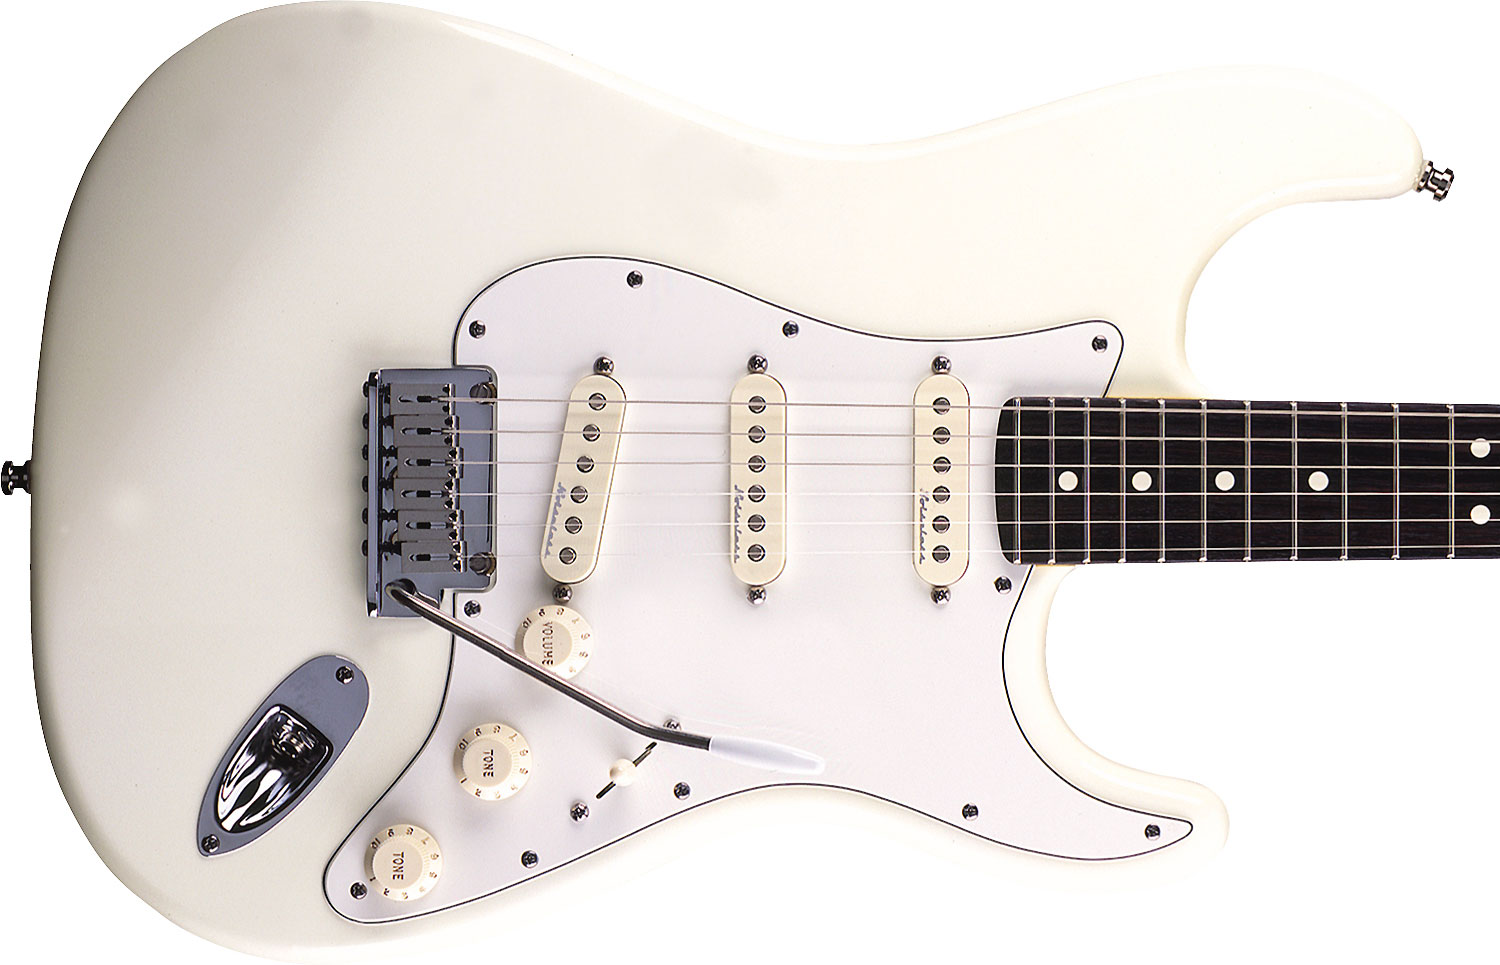 Fender Jeff Beck Strat Usa Signature 3s Trem Rw - Olympic White - E-Gitarre in Str-Form - Variation 2